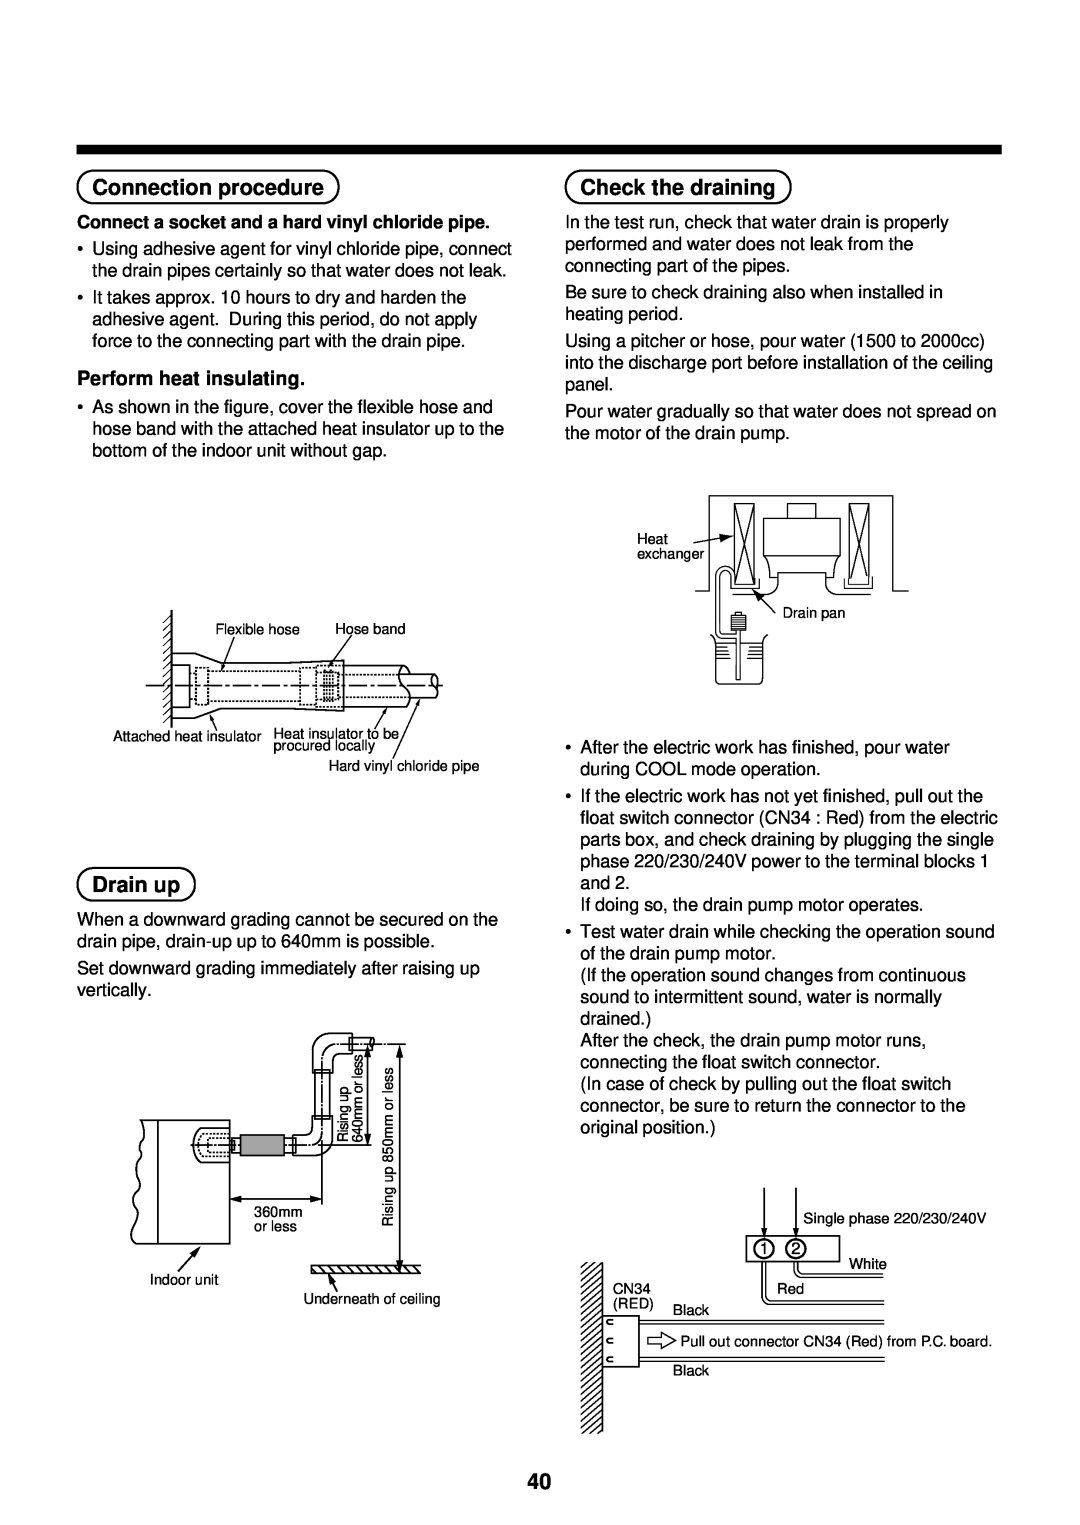 Toshiba RAM-SM560UT-E, RAM-SM800KRT-E Connection procedure, Drain up, Check the draining, Perform heat insulating 